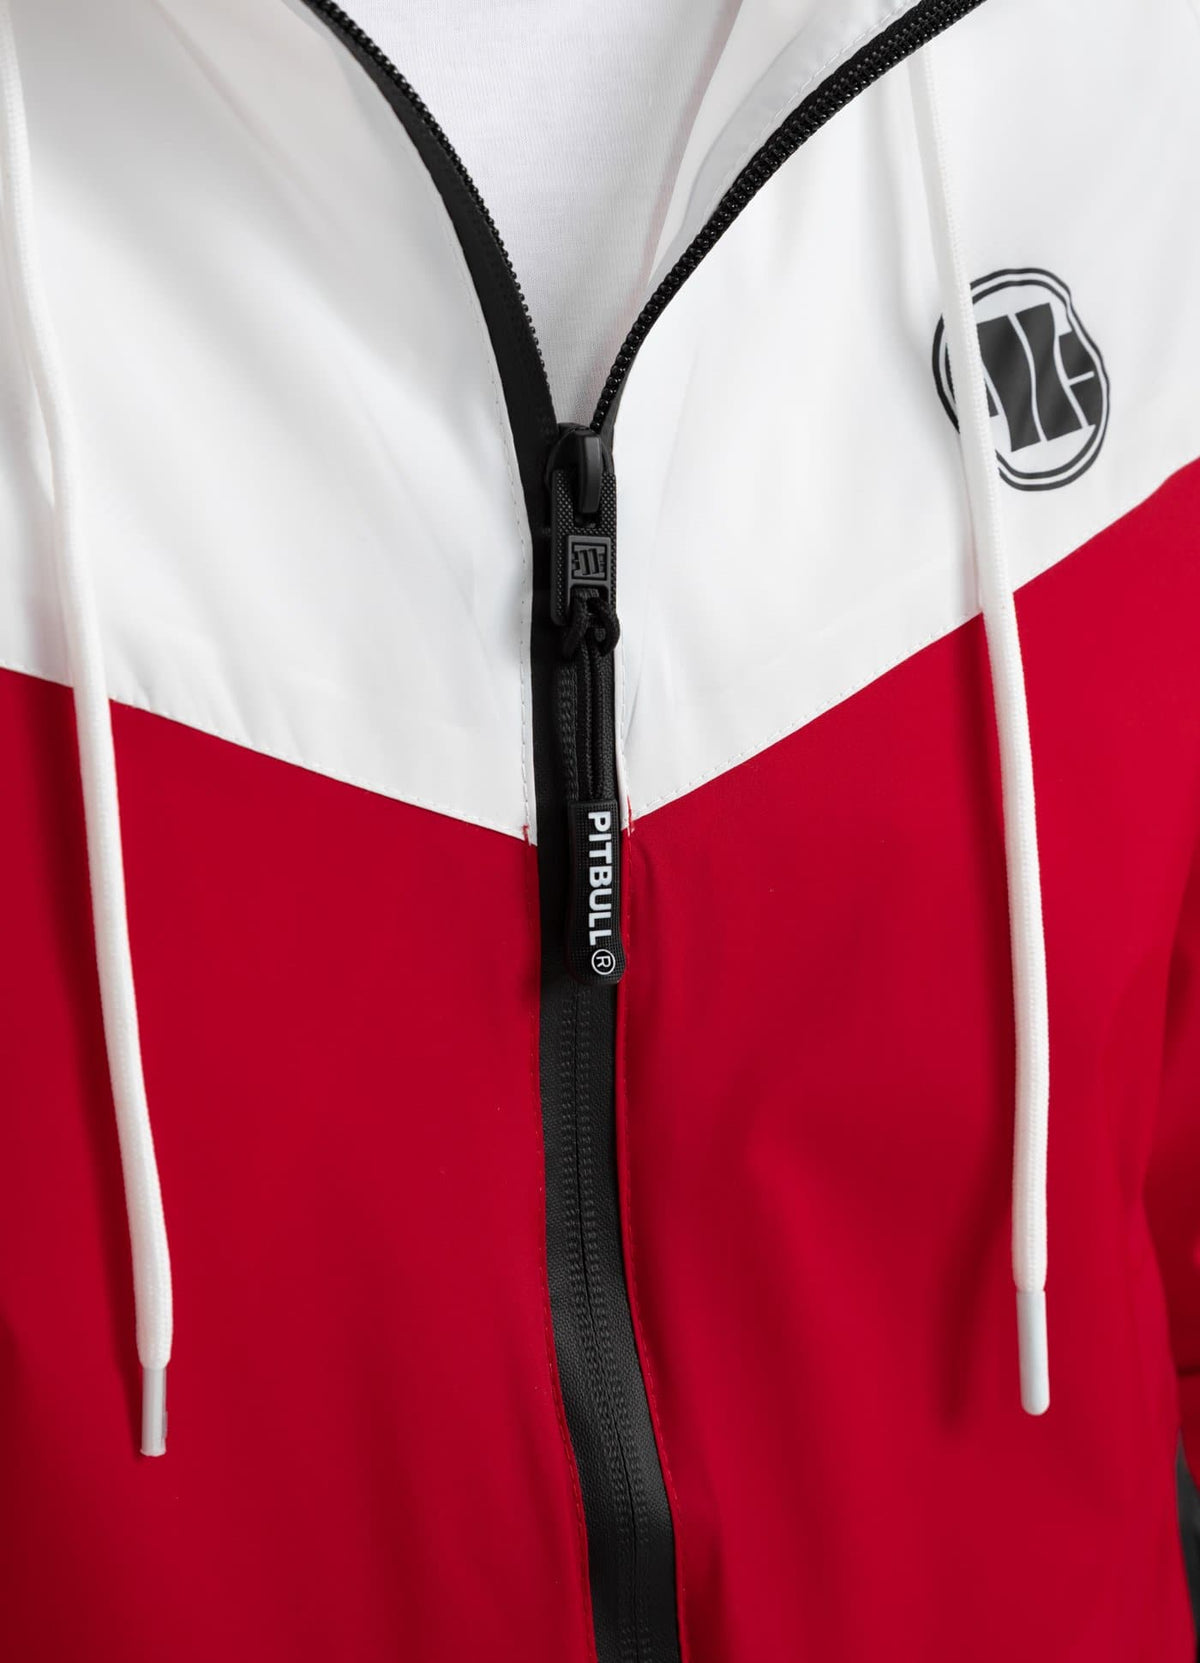 Jacket DIVISION Red/White - Pitbull West Coast International Store 